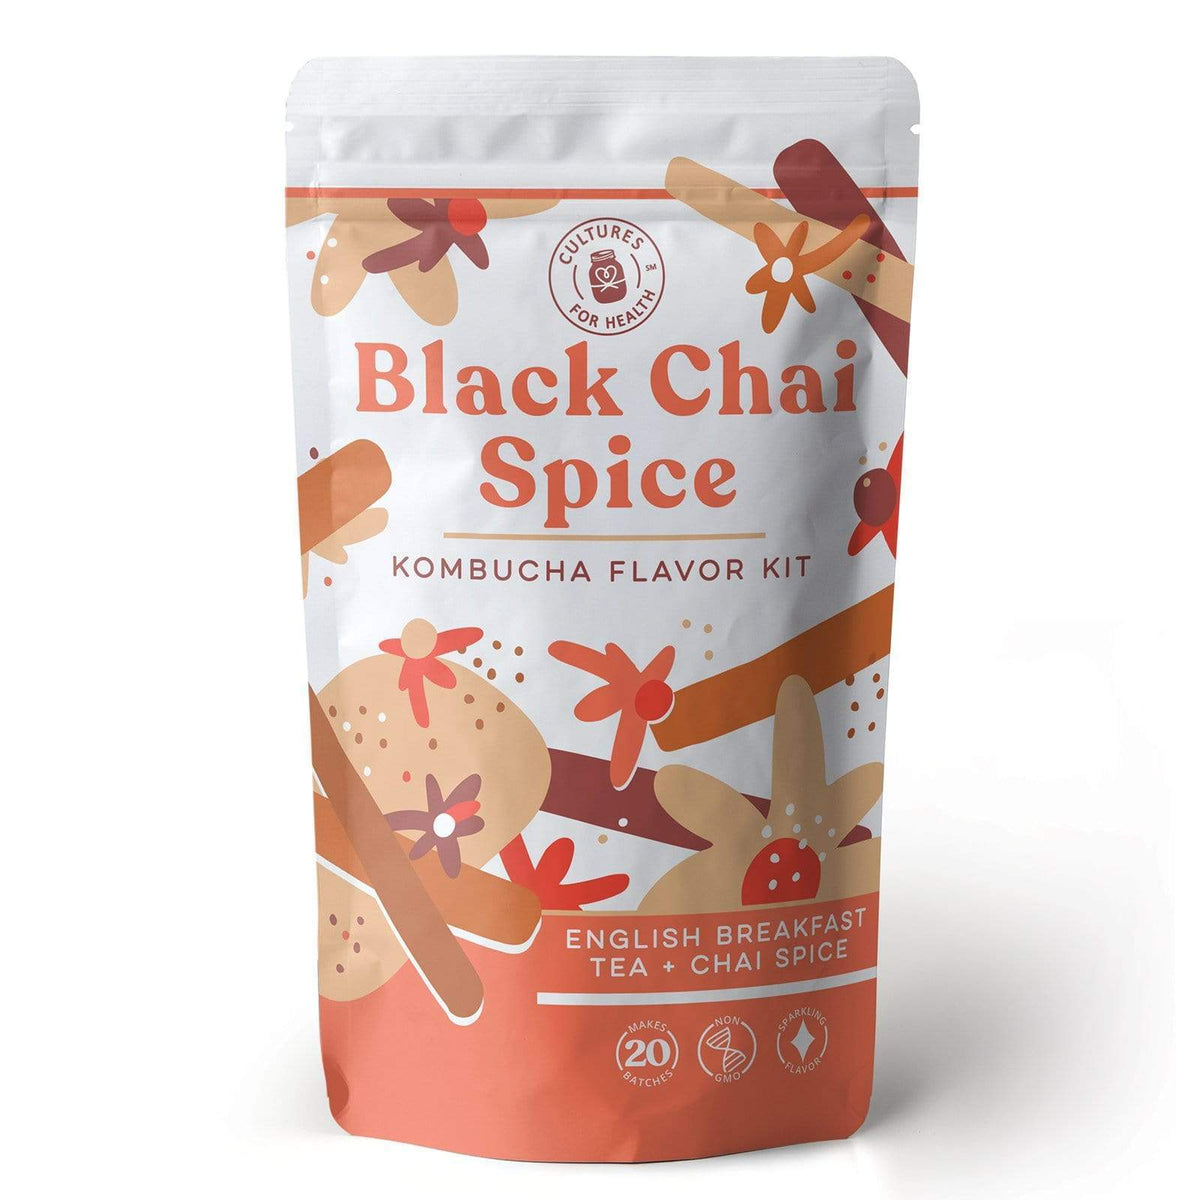 Kombucha Black Chai Spice Kombucha Flavor Kit